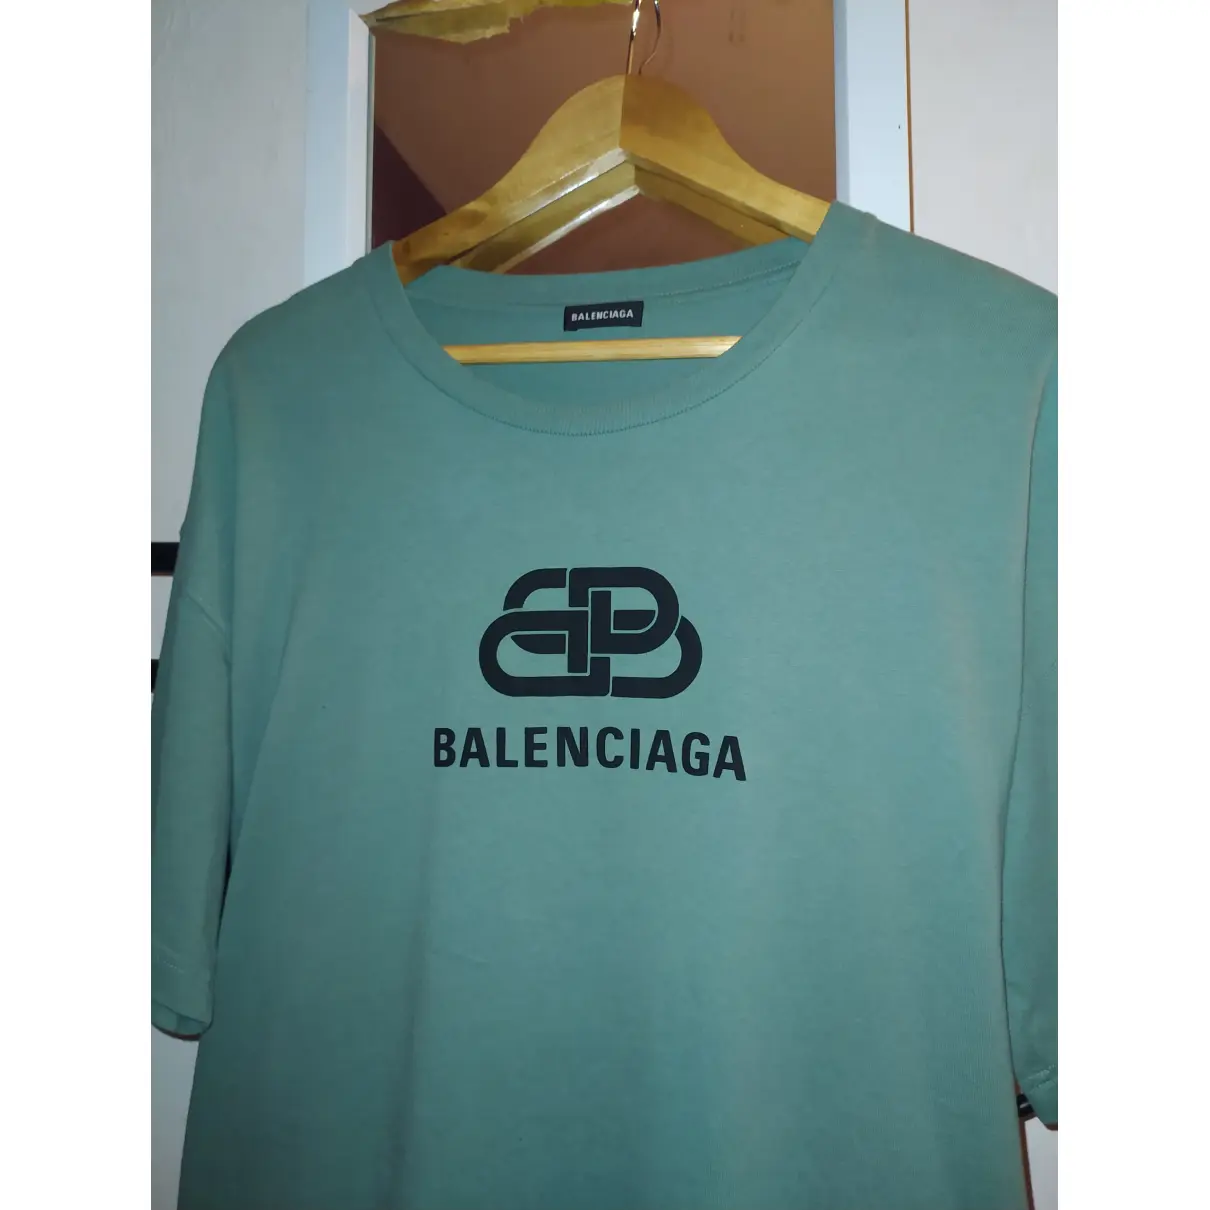 Buy Balenciaga Green Cotton T-shirt online